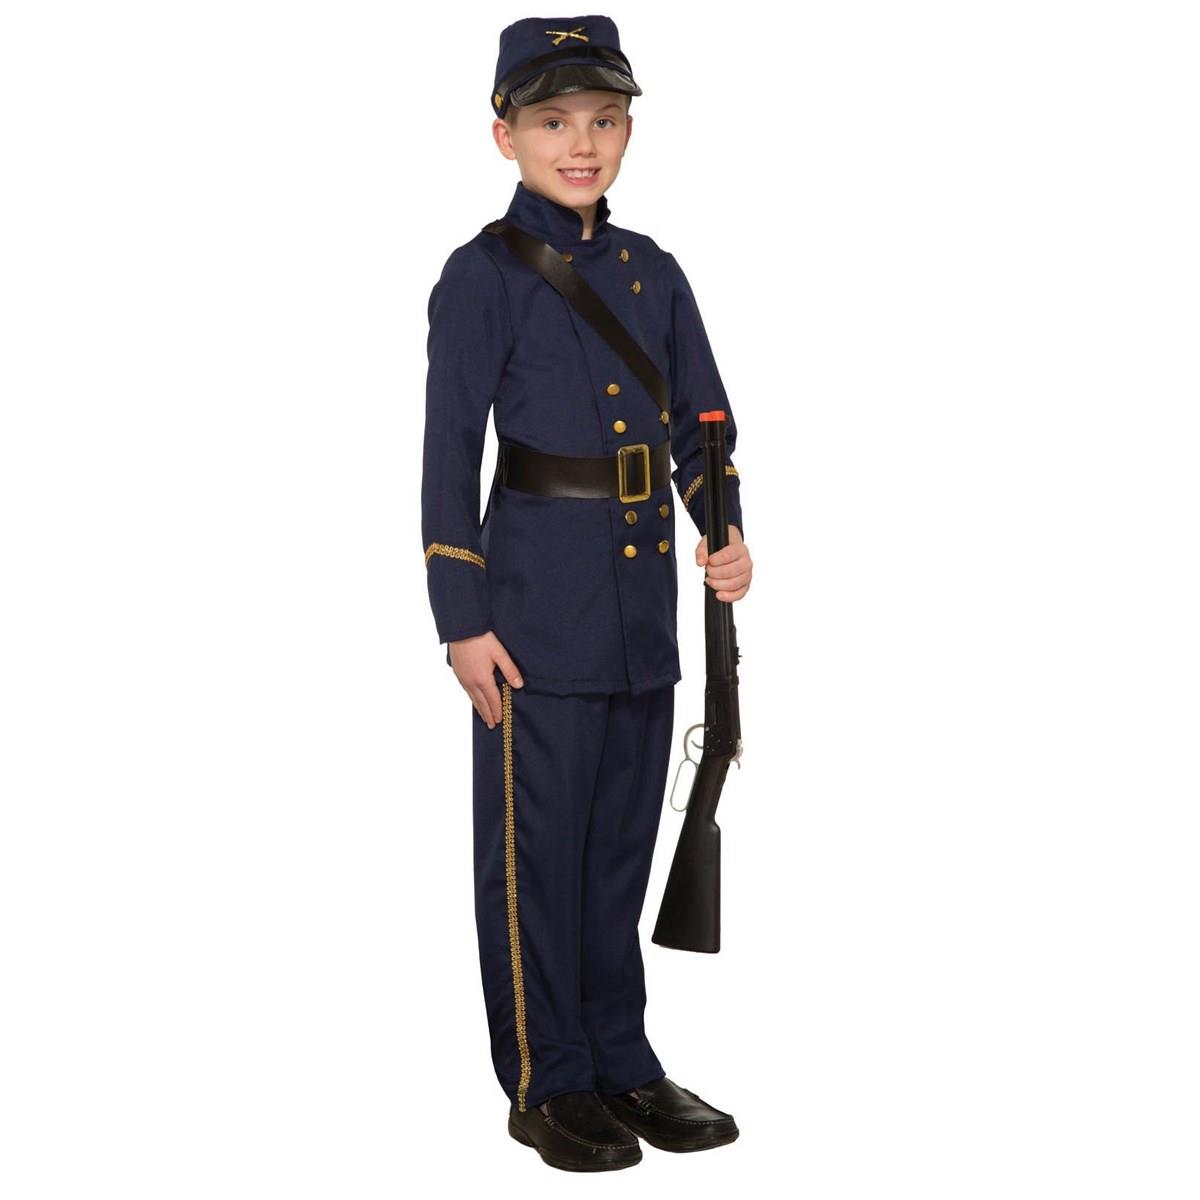 Picture of Forum Novelties 277751 Halloween Boys Civil War Soldier Costume - Small